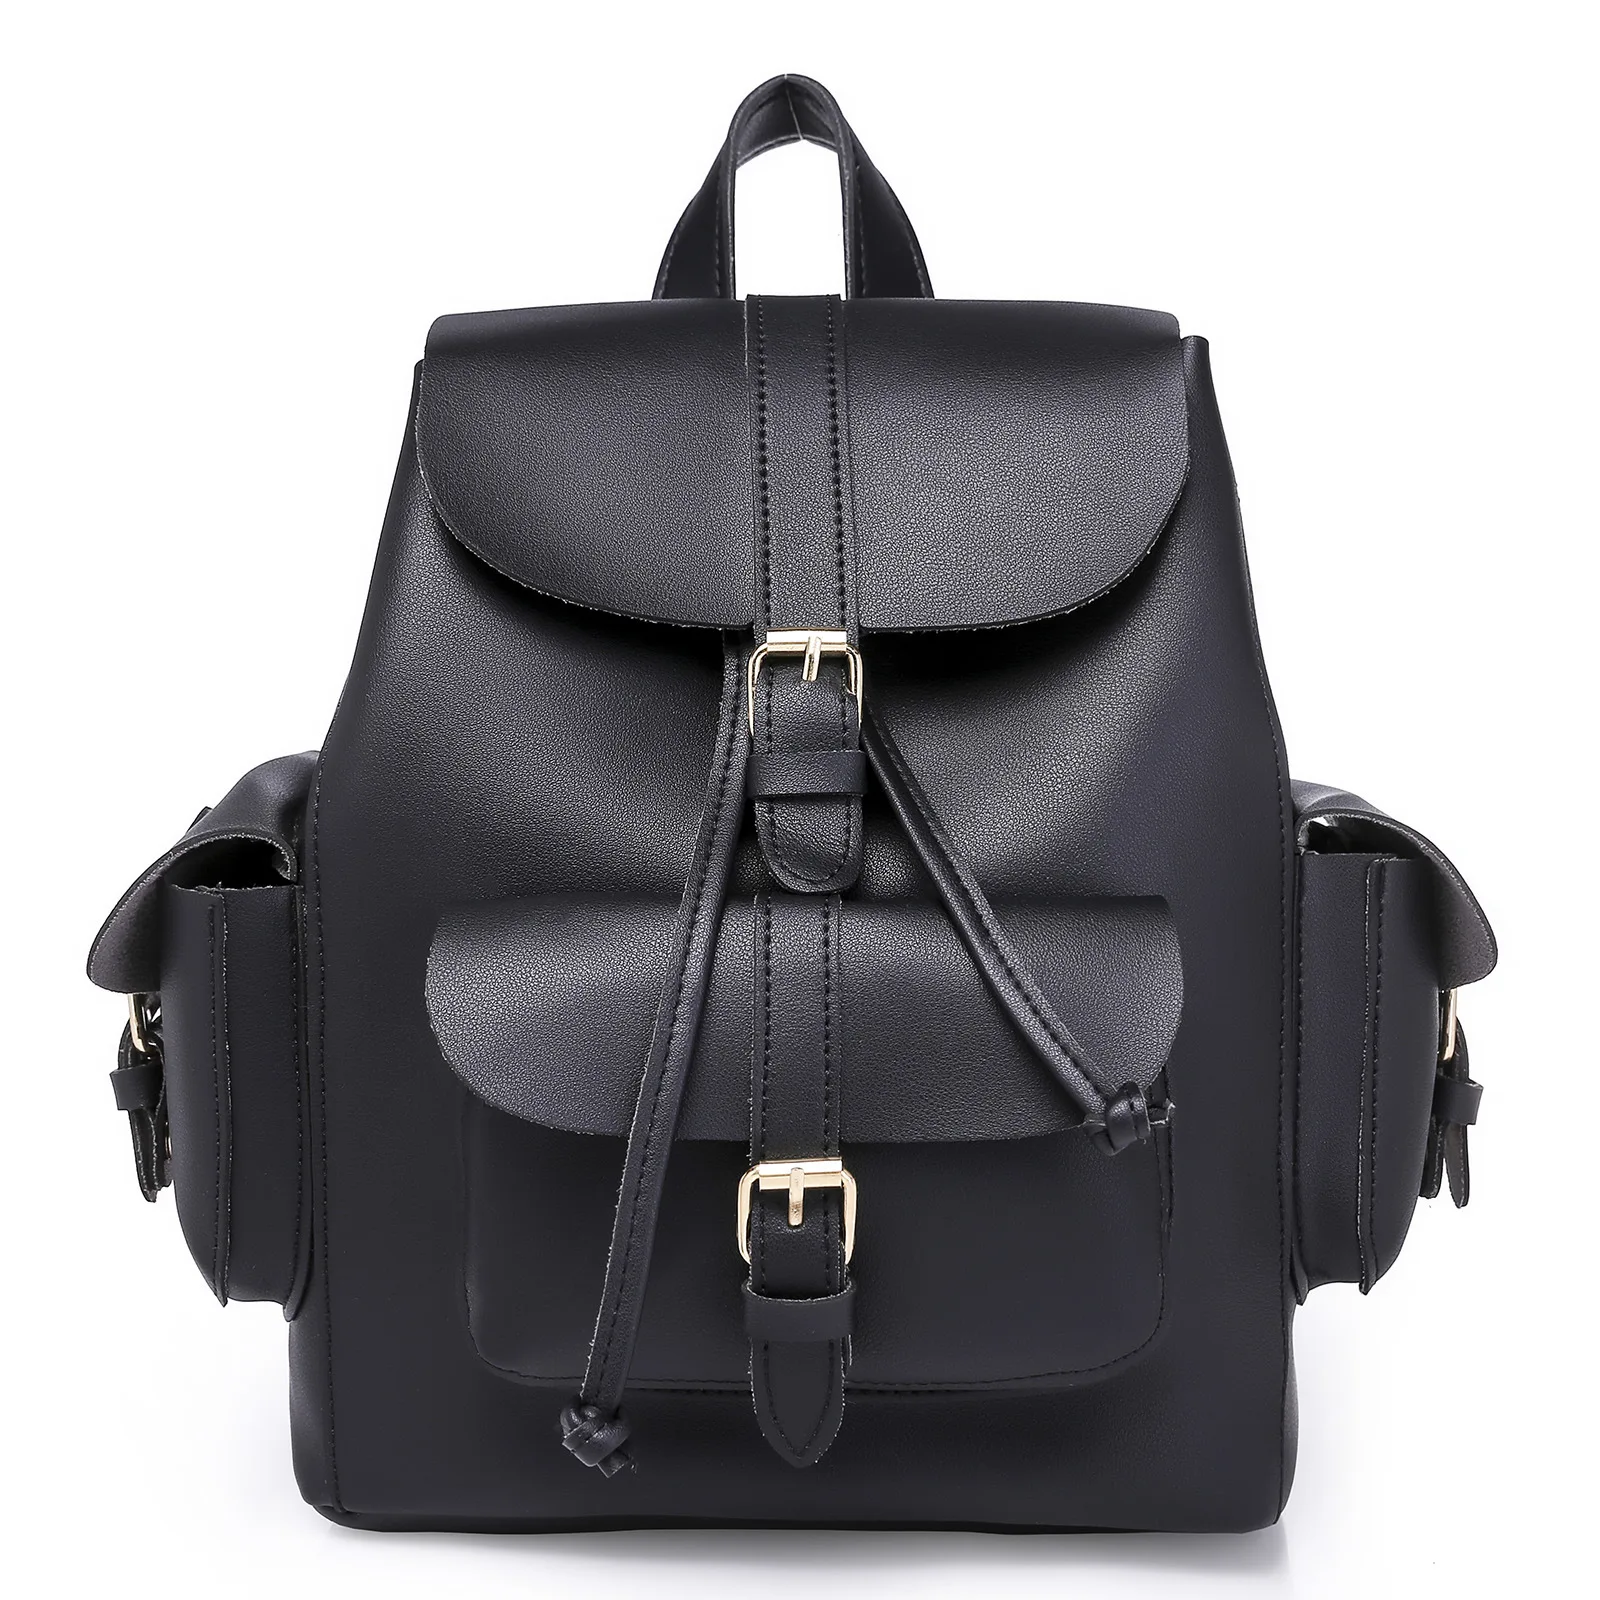 

New PU Leather Backpack Women Fashionable Teenage Backpacks For Girls Laptop Bagpack School Bags Mochilas Feminina Mochila Mujer